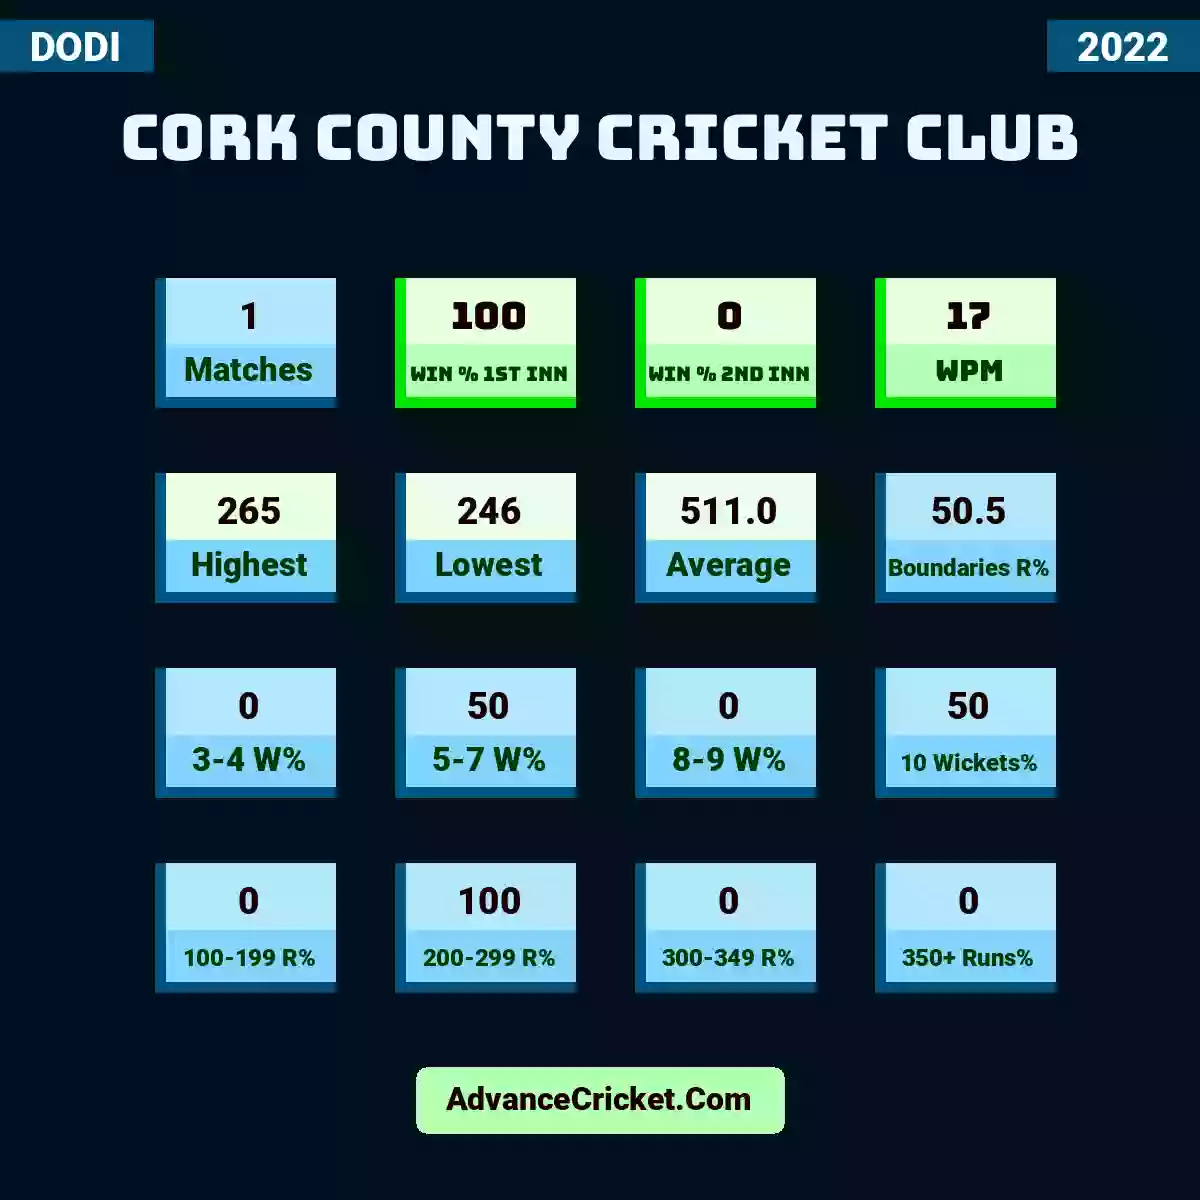 Image showing Cork County Cricket Club with Matches: 1, Win % 1st Inn: 100, Win % 2nd Inn: 0, WPM: 17, Highest: 265, Lowest: 246, Average: 511.0, Boundaries R%: 50.5, 3-4 W%: 0, 5-7 W%: 50, 8-9 W%: 0, 10 Wickets%: 50, 100-199 R%: 0, 200-299 R%: 100, 300-349 R%: 0, 350+ Runs%: 0.